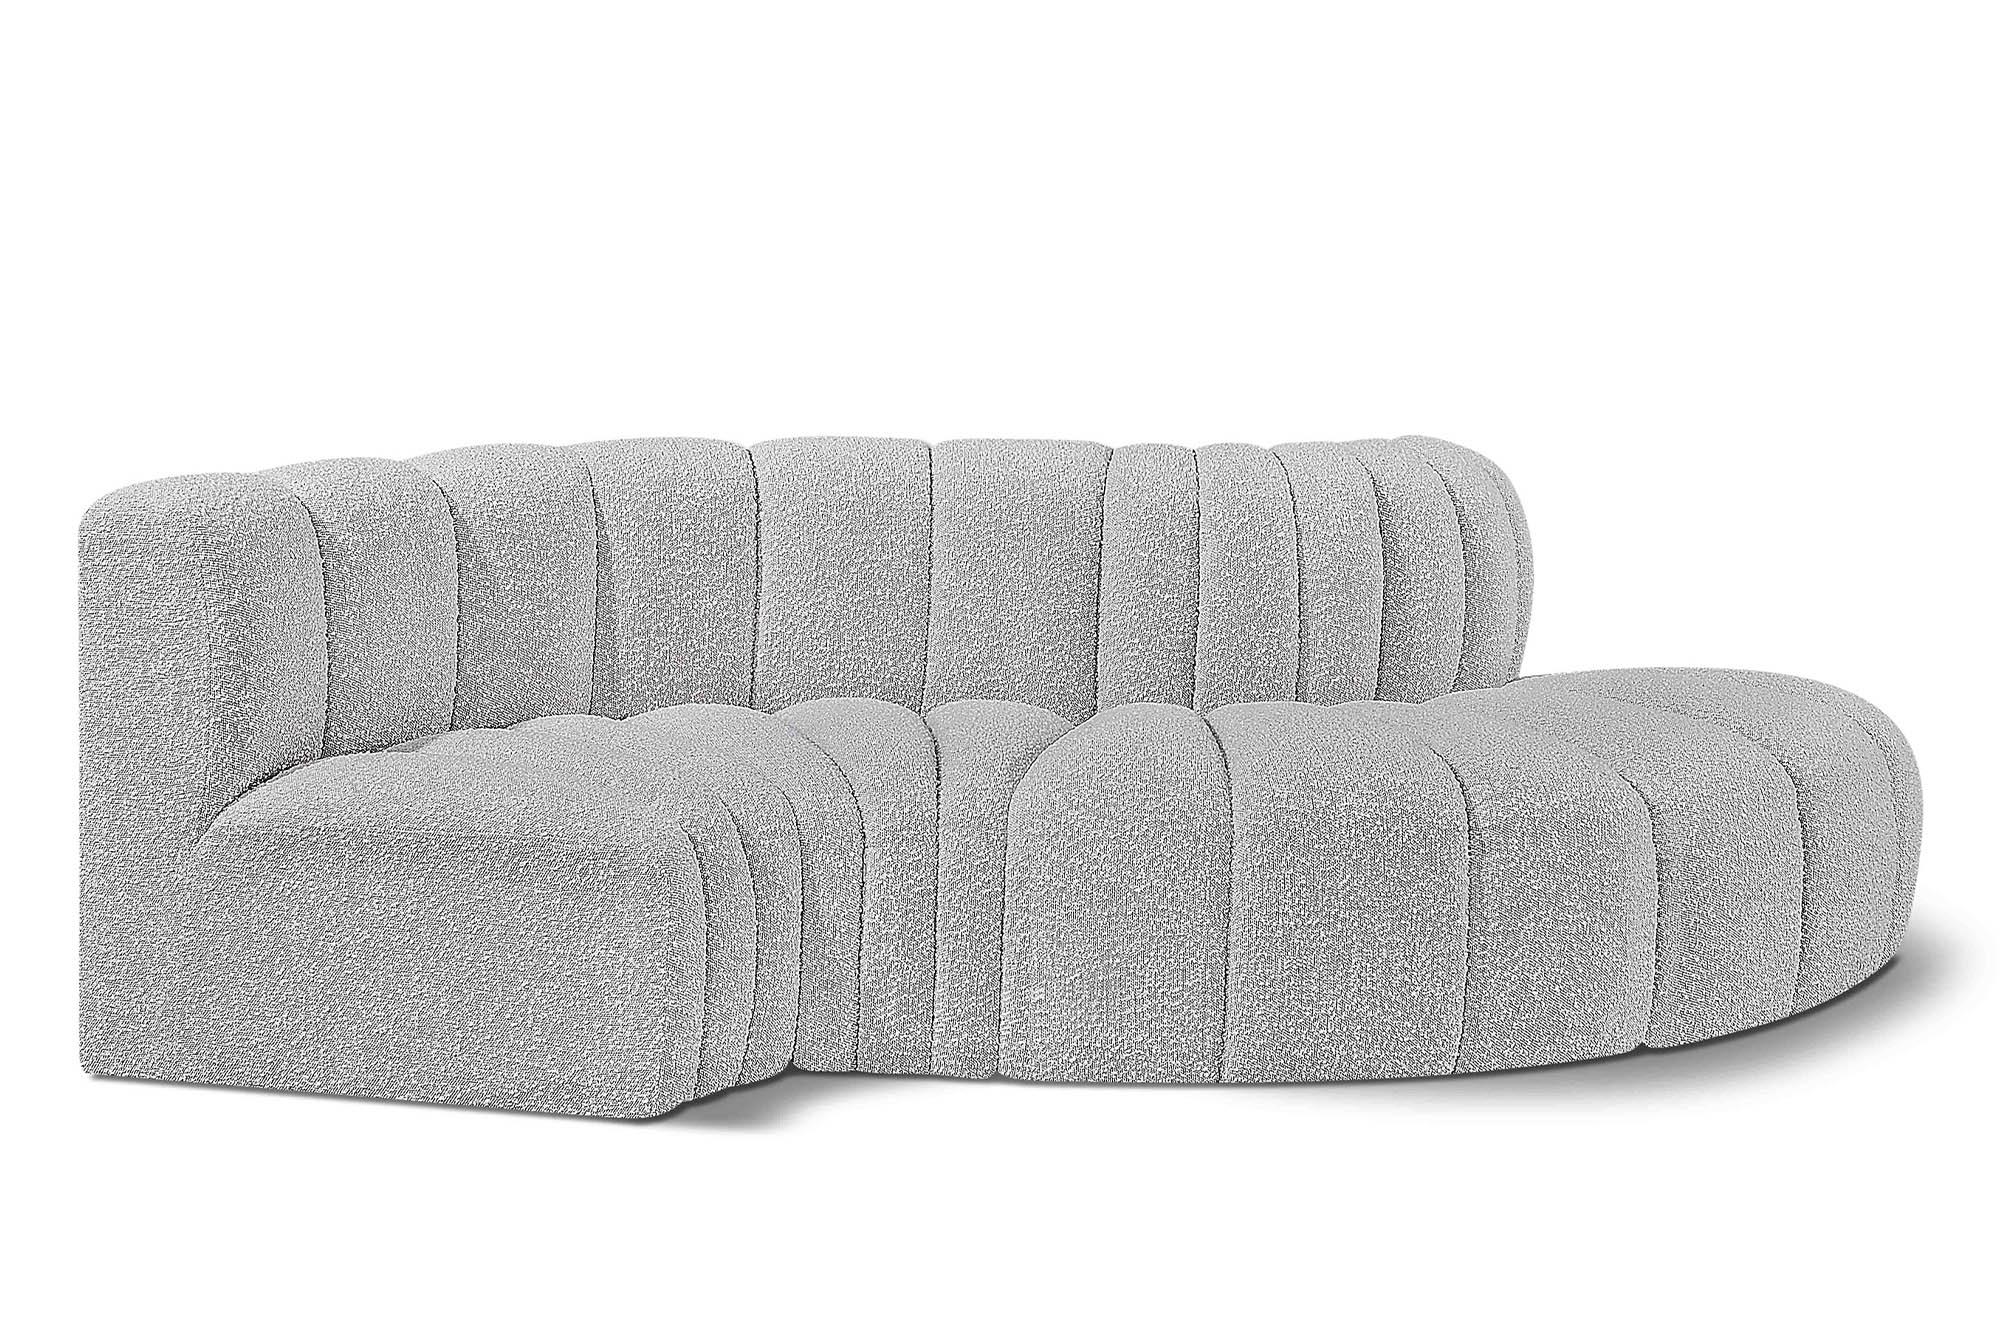 Contemporary, Modern Modular Sectional Sofa ARC 102Grey-S4D 102Grey-S4D in Gray 